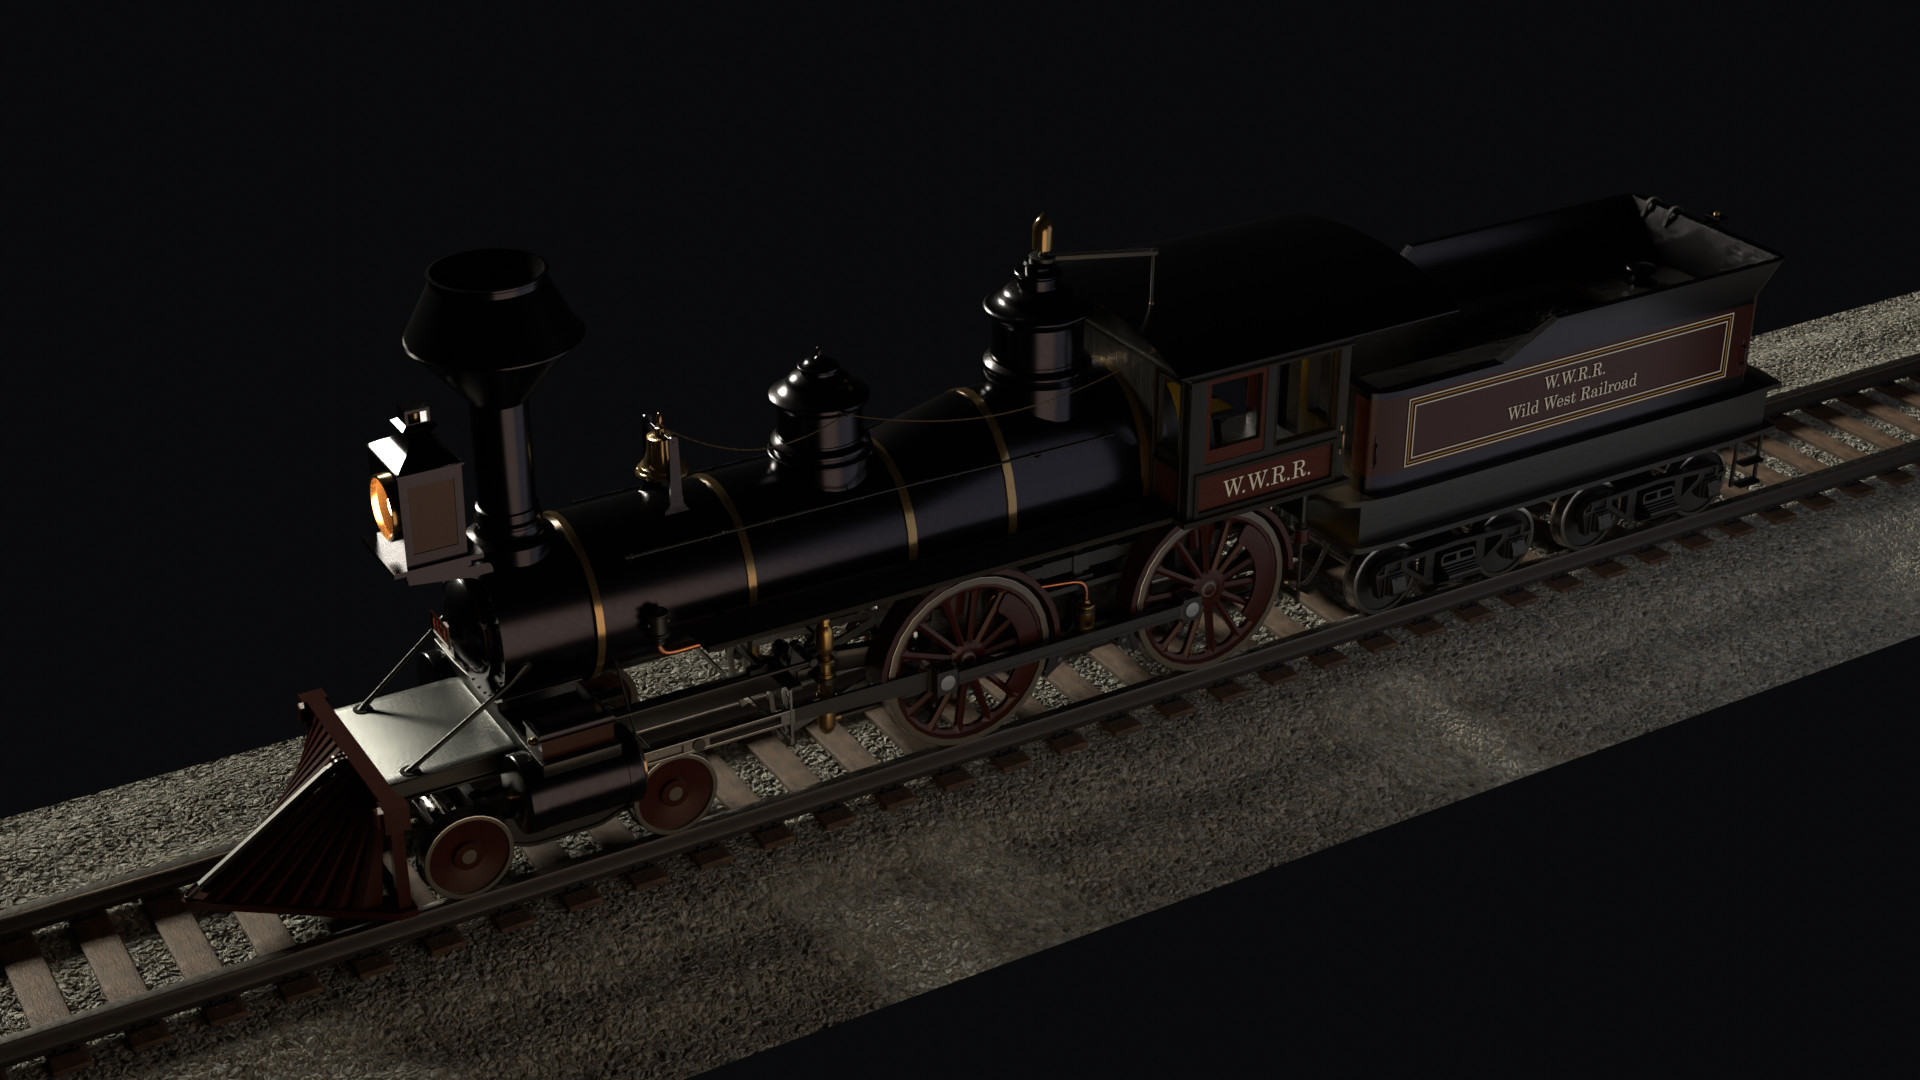 First Project Render - Steam Locomotive - Show - GameDev.tv